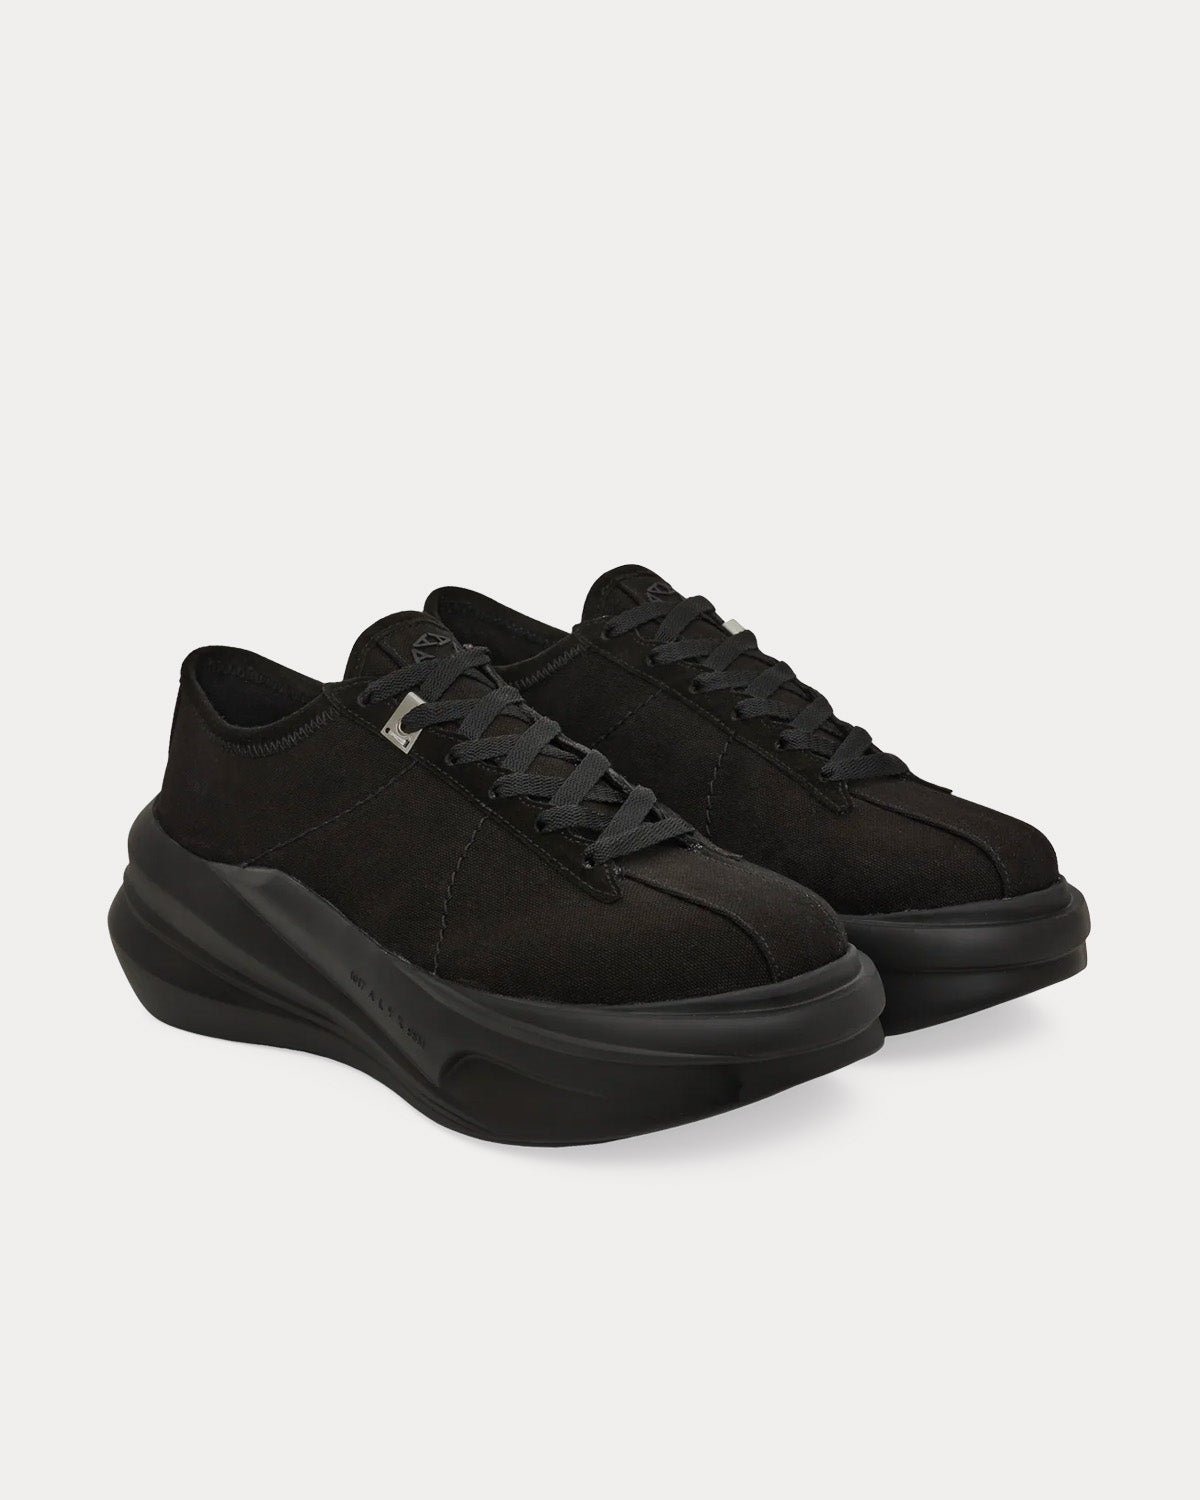 1017 ALYX 9SM - Aria Black Low Top Sneakers